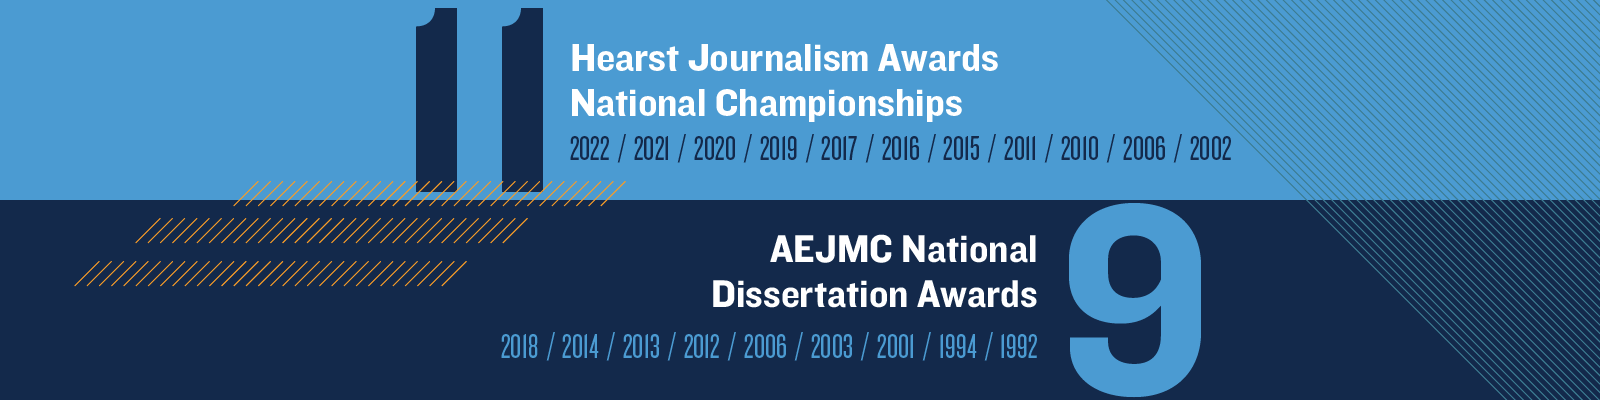 11 Hearst Journalism Awards national championships; nine national dissertation awards